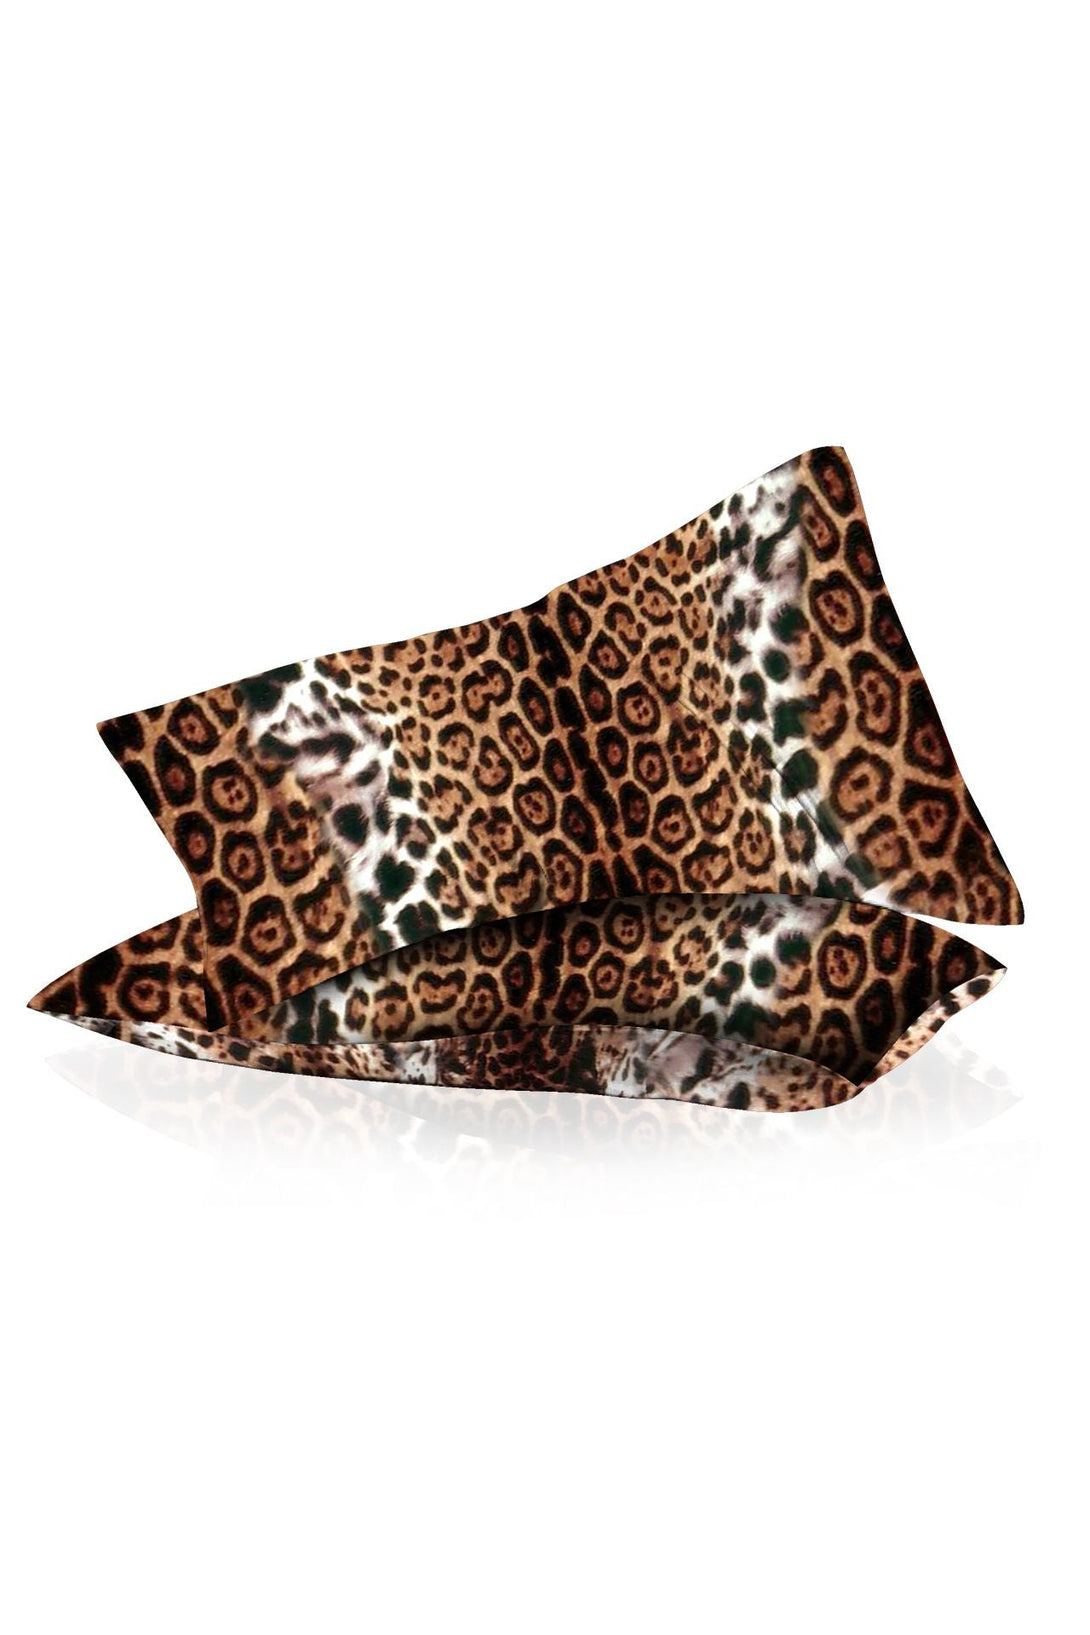 "designer pillows" "Shahida Parides" "leopard throw pillow" "pillows for beds decorative"